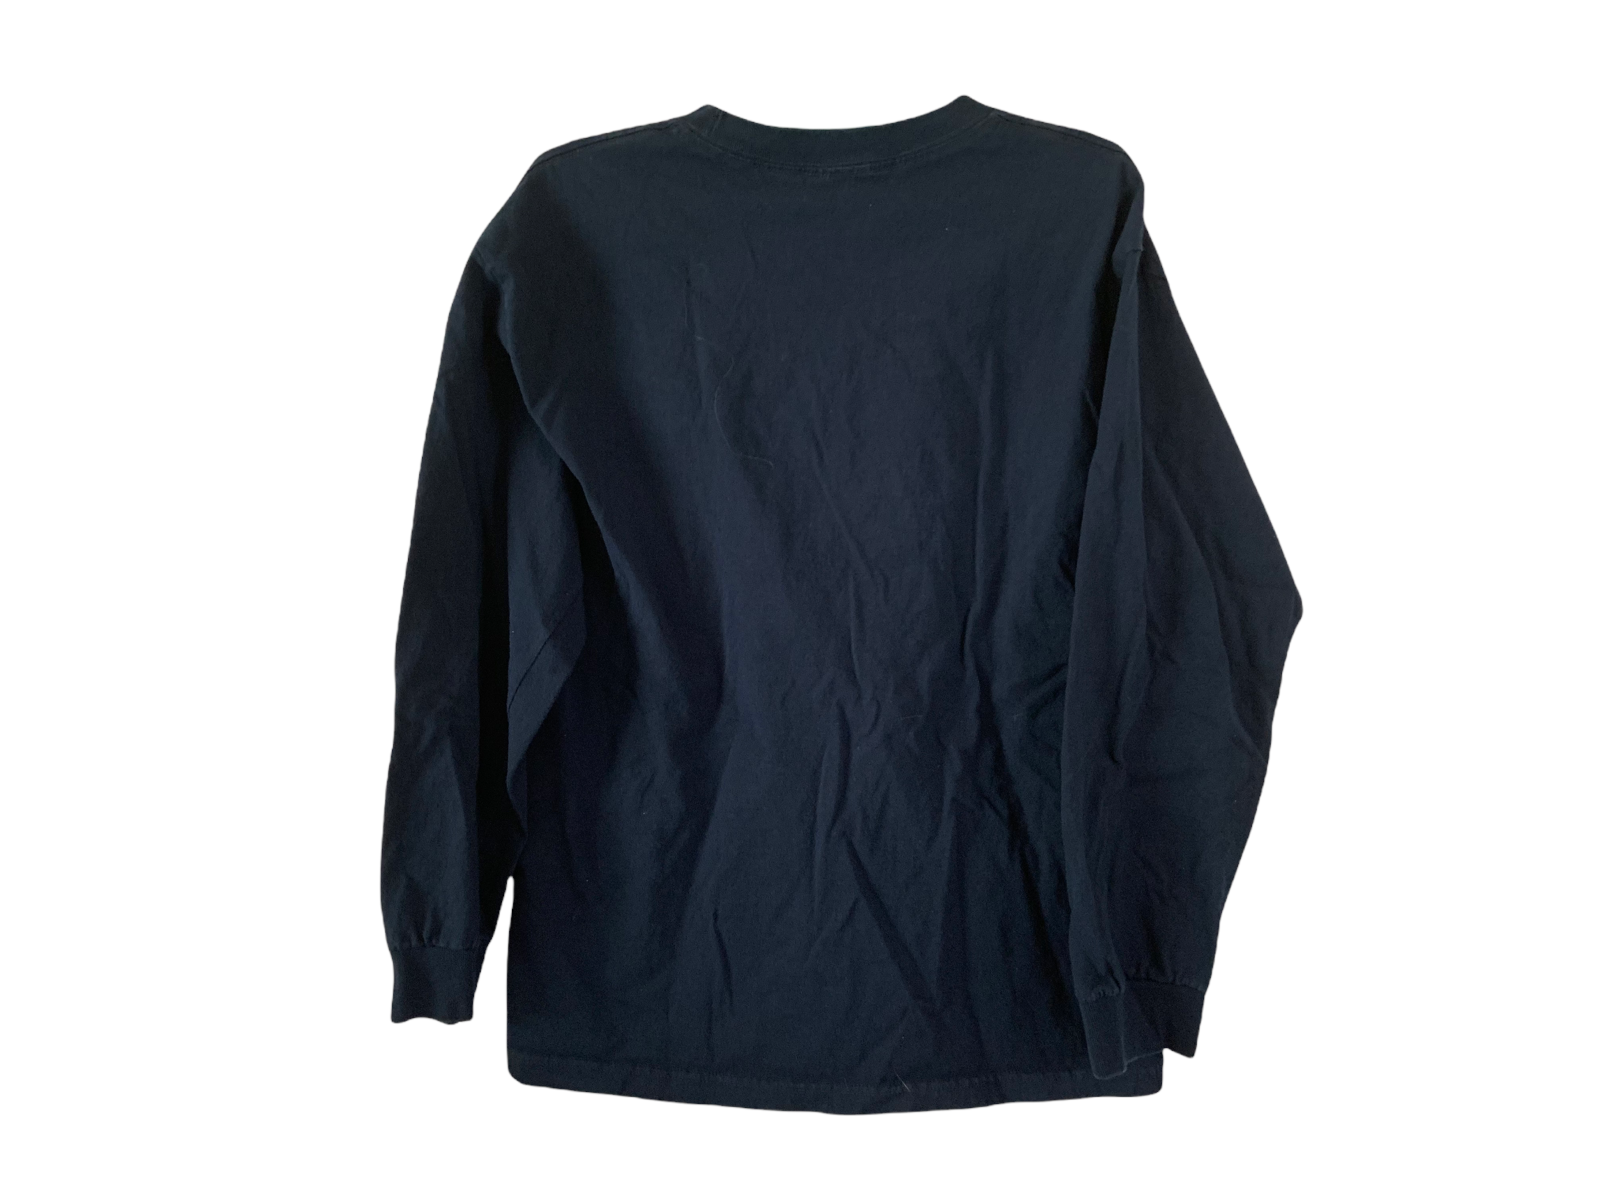 Tweetsie Railroad Est 1957 Men's Long Sleeve T Shirt Size Large | eBay